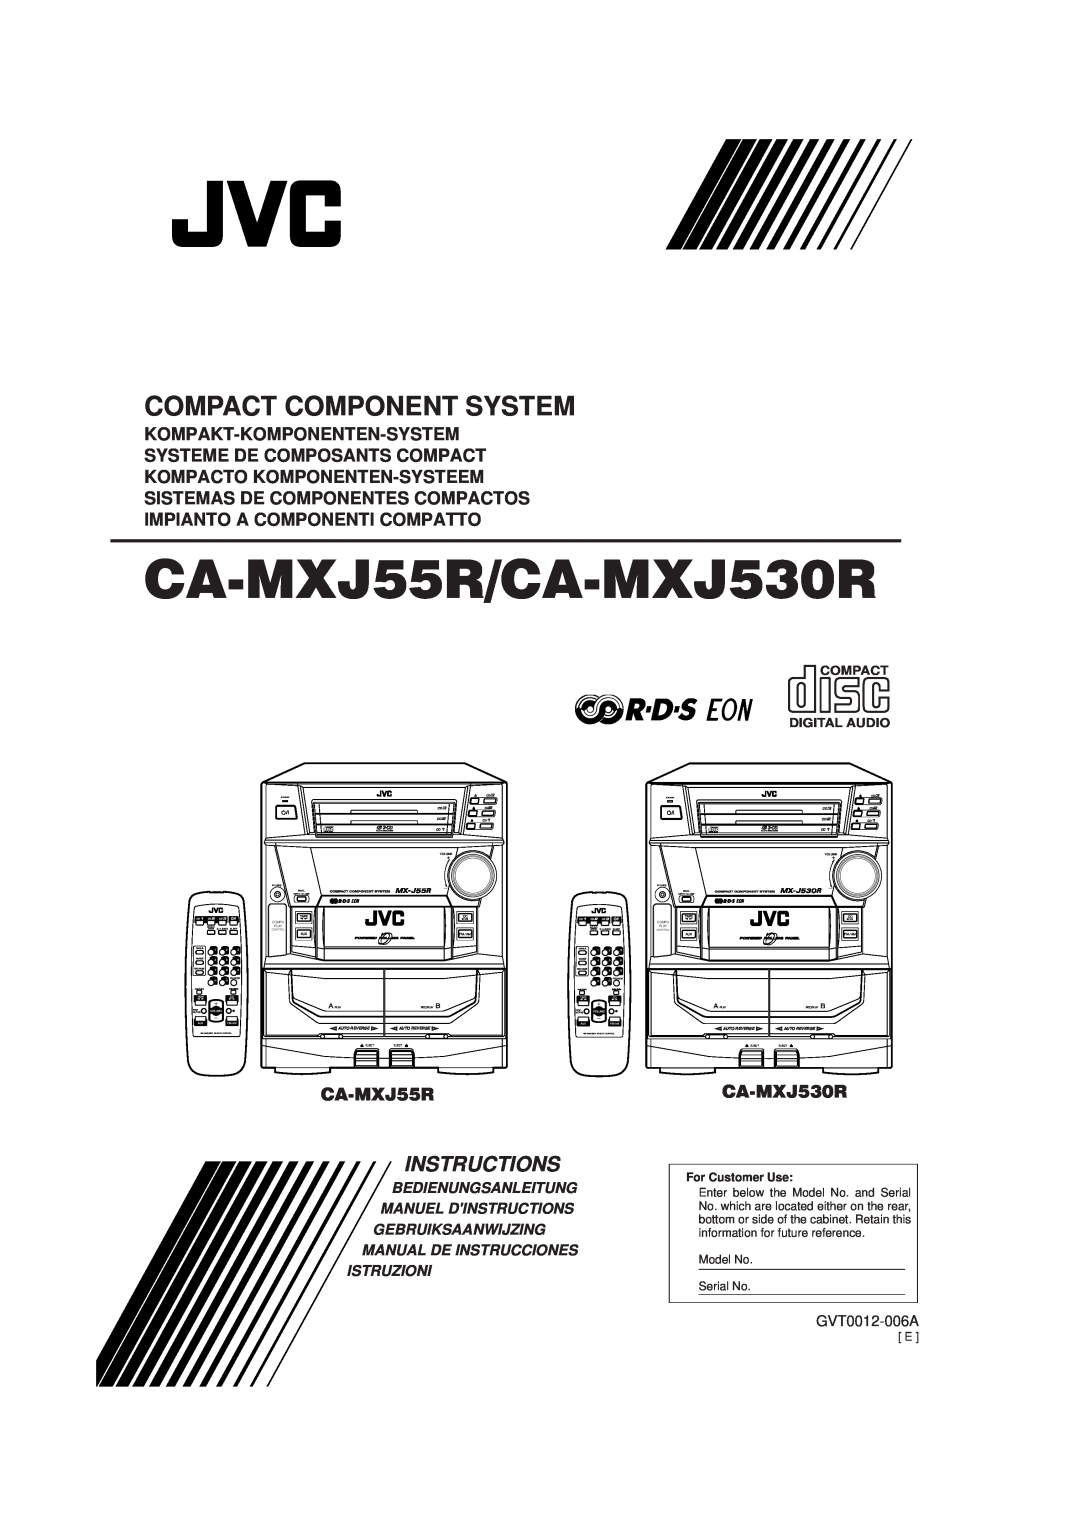 JVC CA-MXJ55R manual Kompakt-Komponenten-System, Systeme De Composants Compact, Kompacto Komponenten-Systeem, CA-MXJ530R 